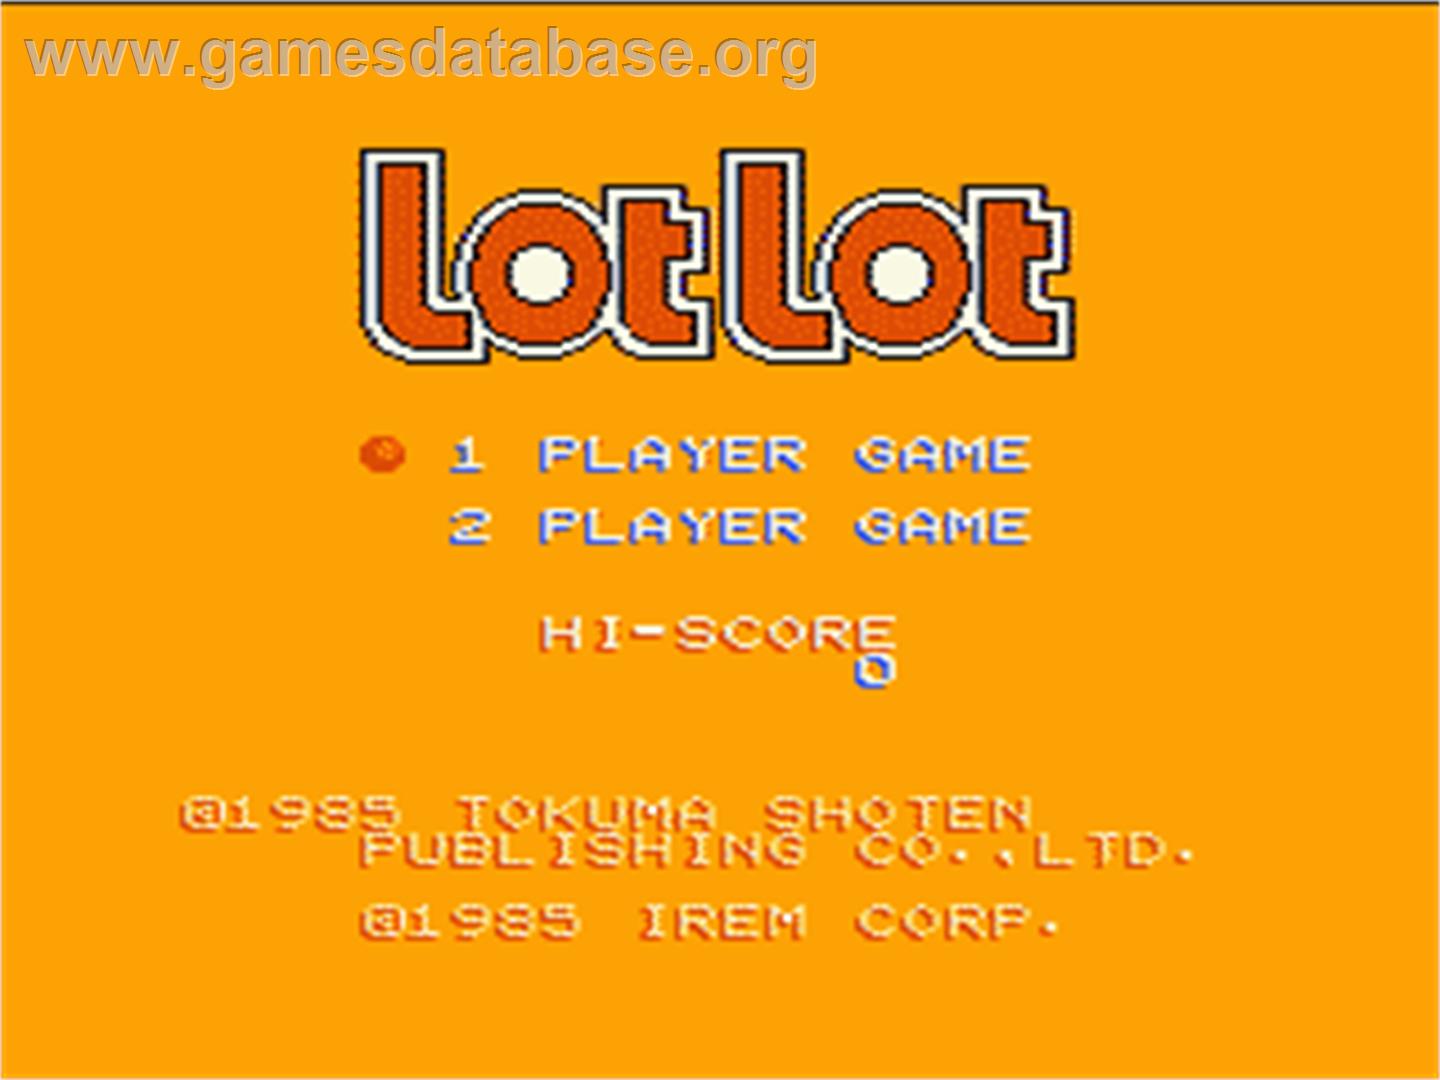 Lot Lot - Nintendo NES - Artwork - Title Screen